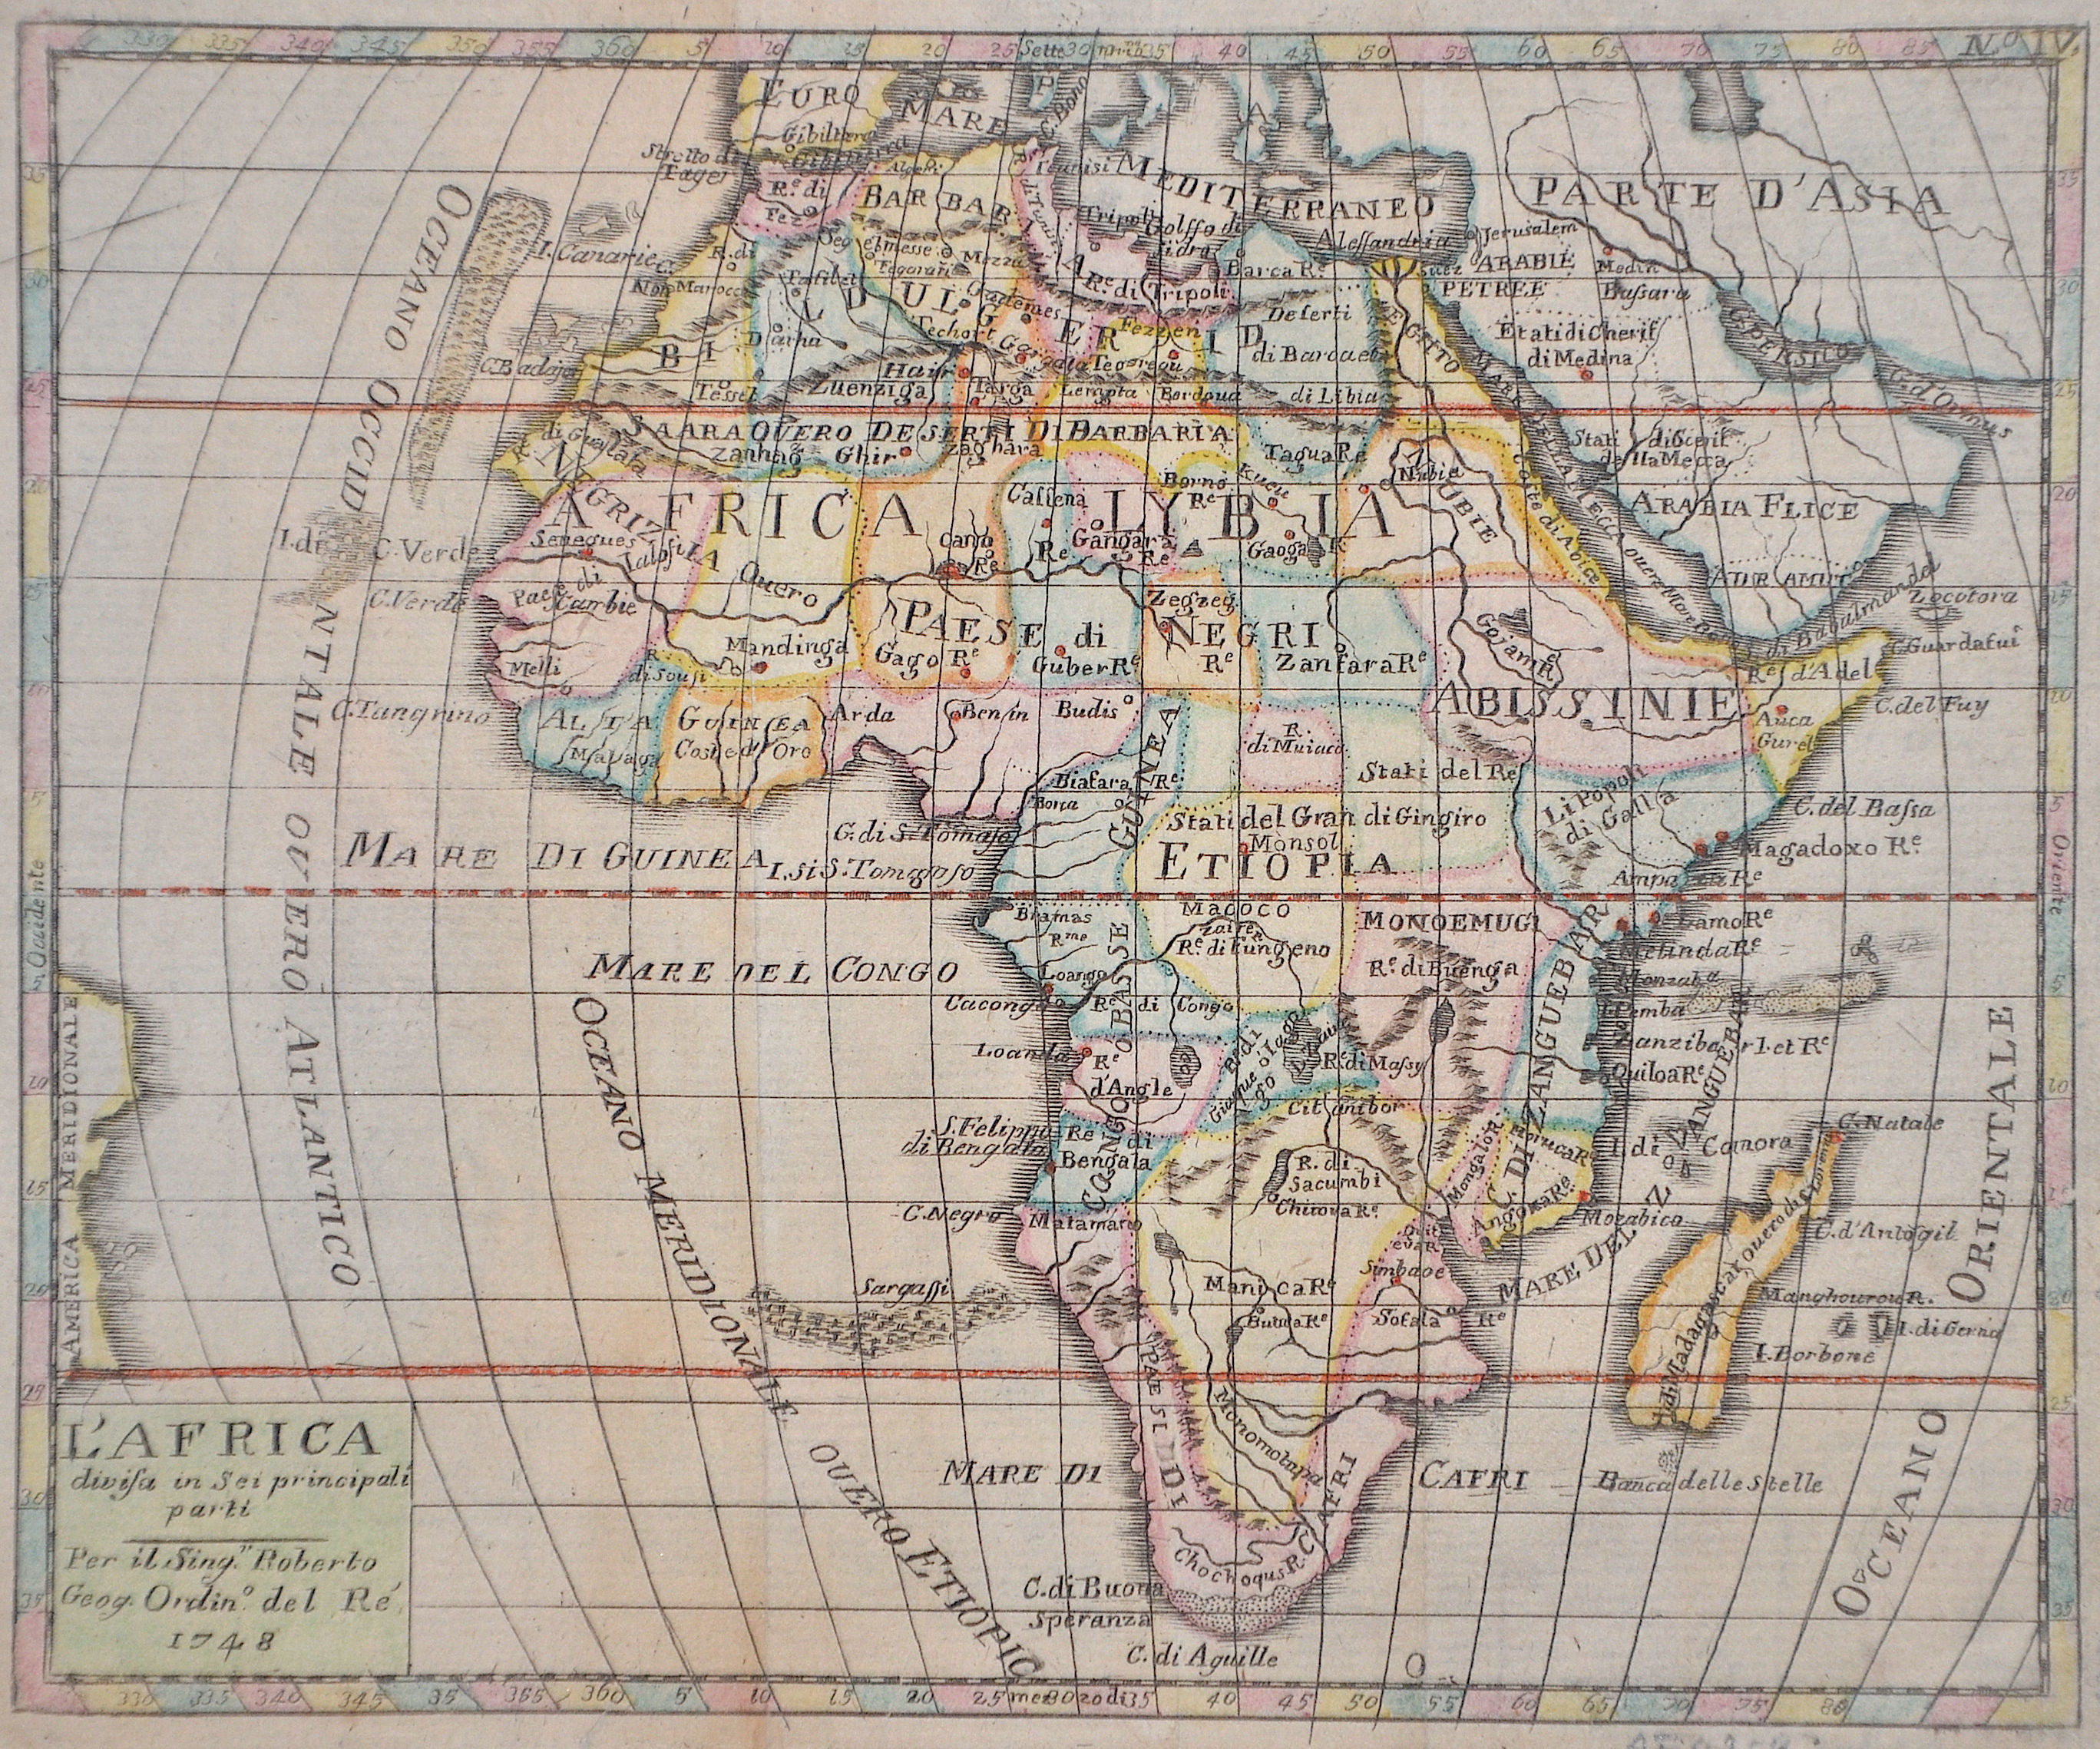 Vaugondy, de Didier/ Gilles Robert L’Africa divis in Sei principali parti